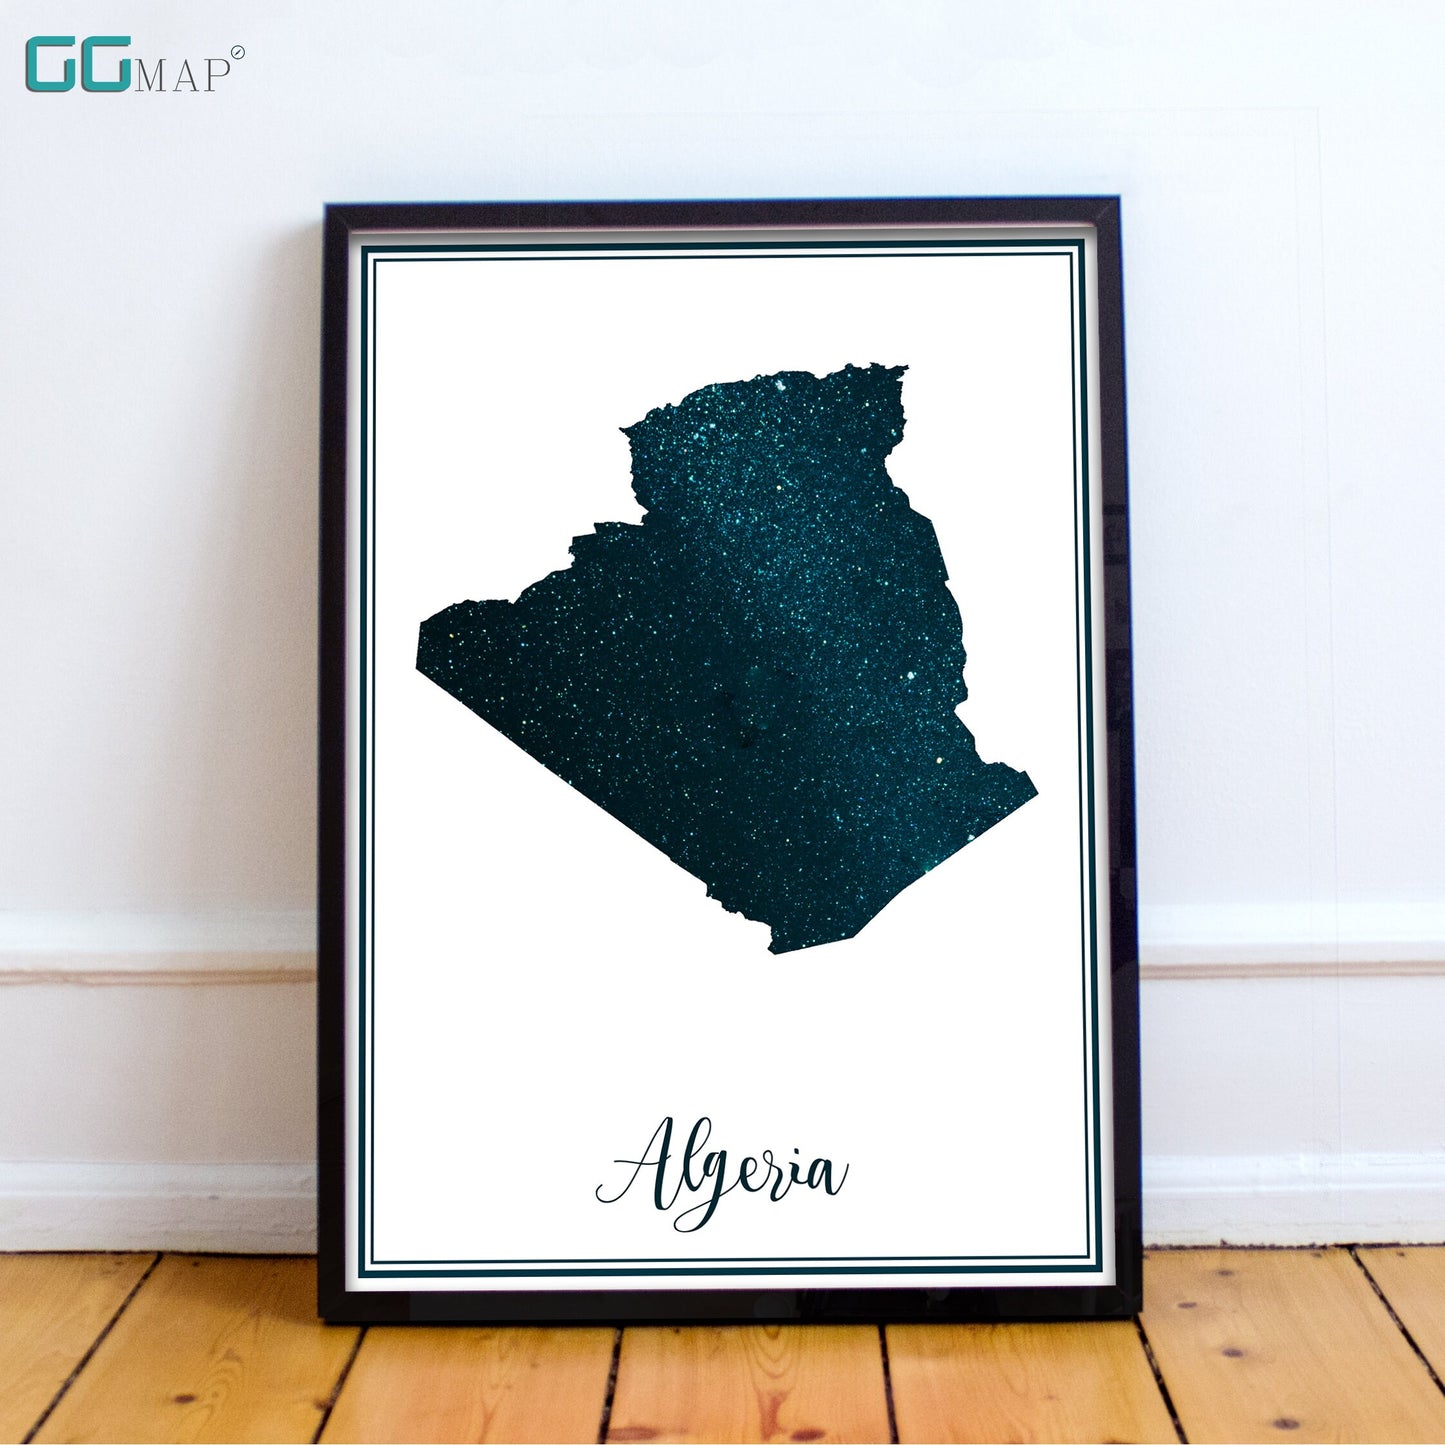 ALGERIA map - Algeria stars map - Travel poster - Home Decor - Wall decor - Office map - Algeria gift - GeoGIS studio